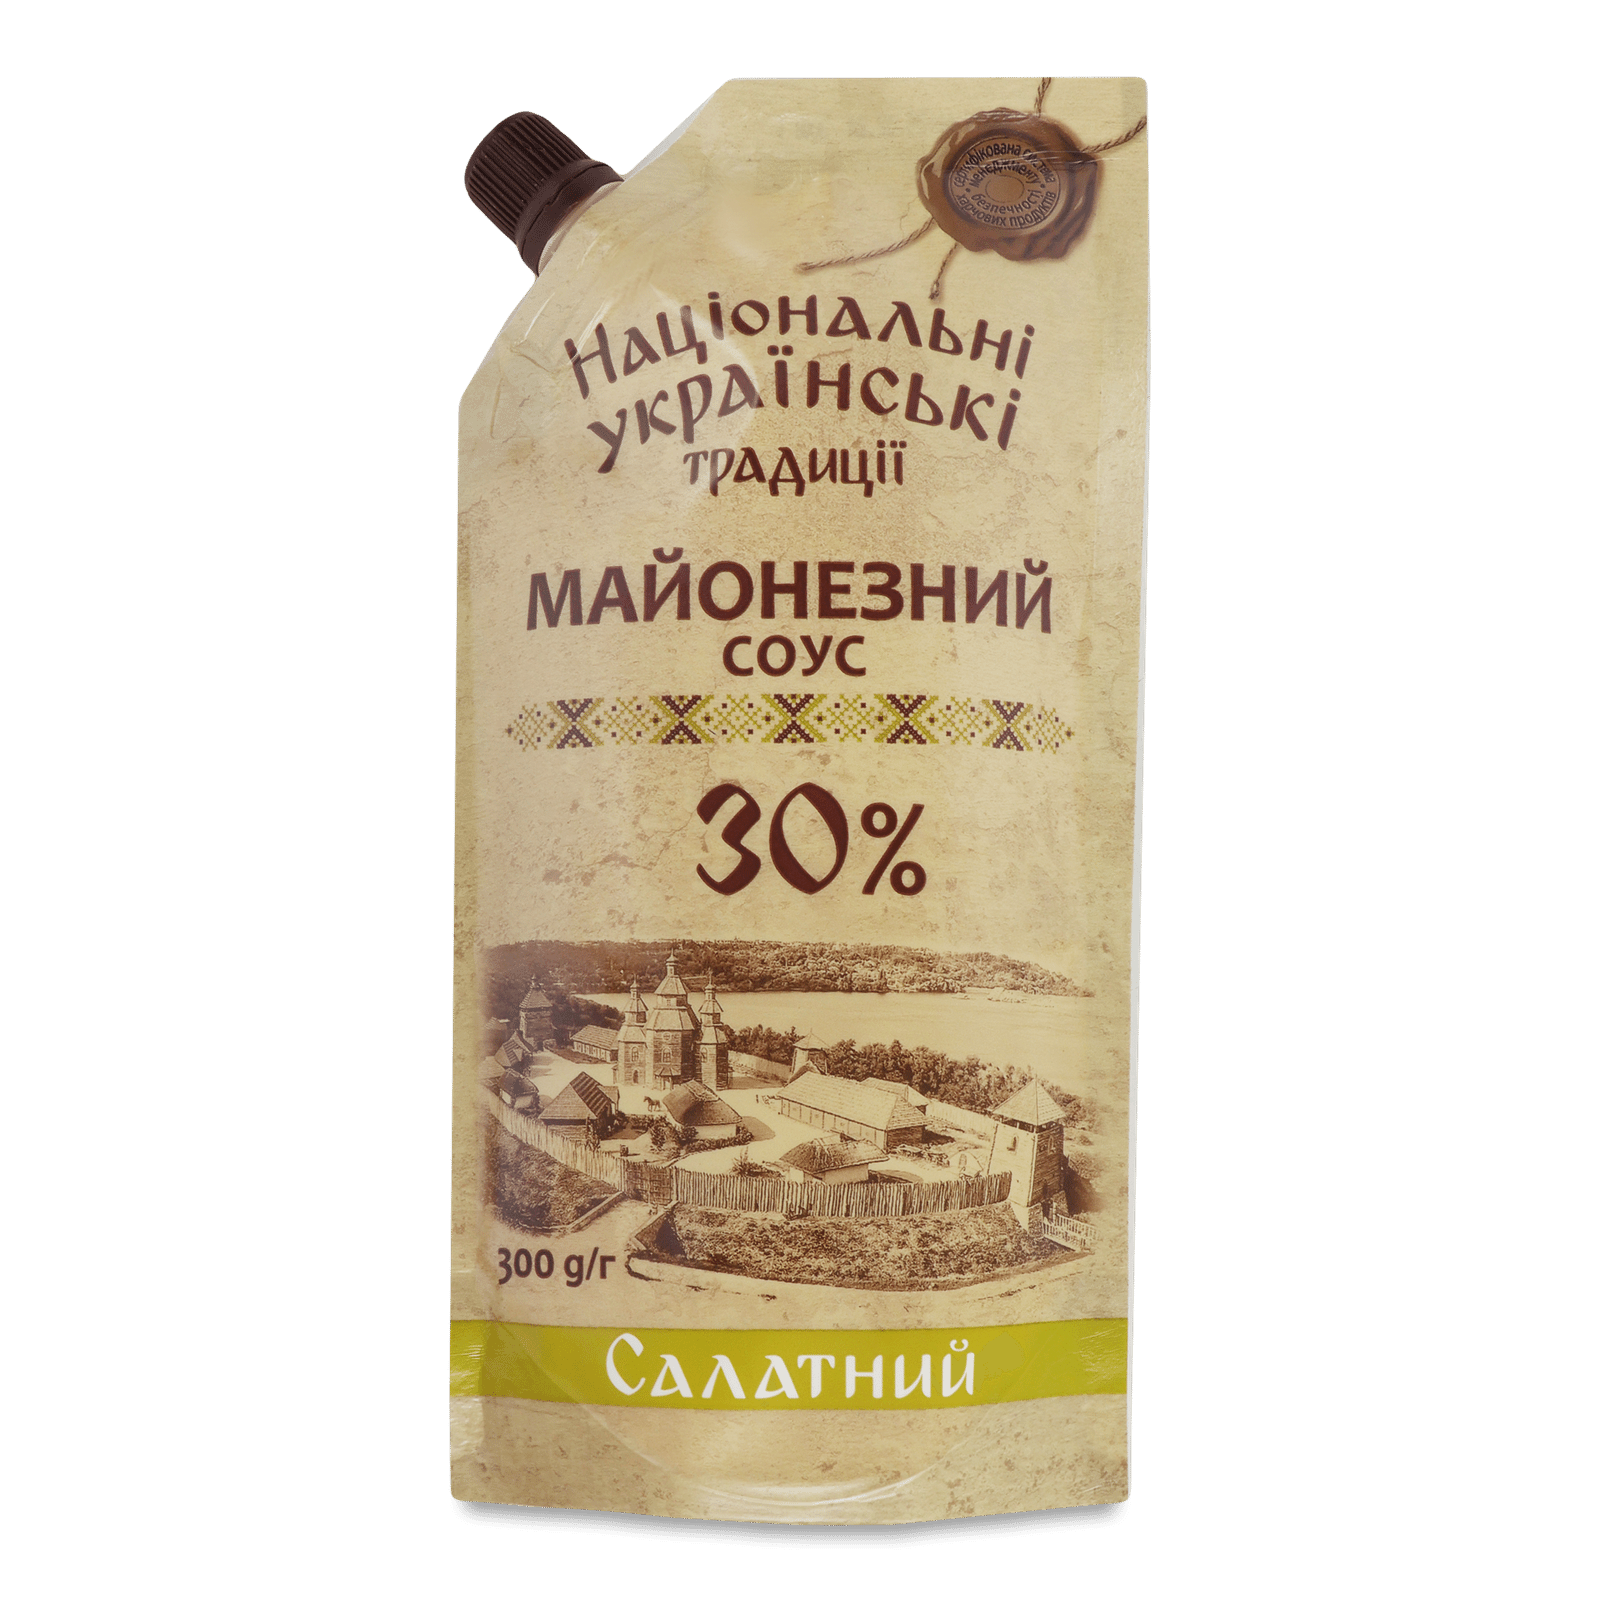 Соус Національні Українські Традиції Салатний майонезн 30% - 1